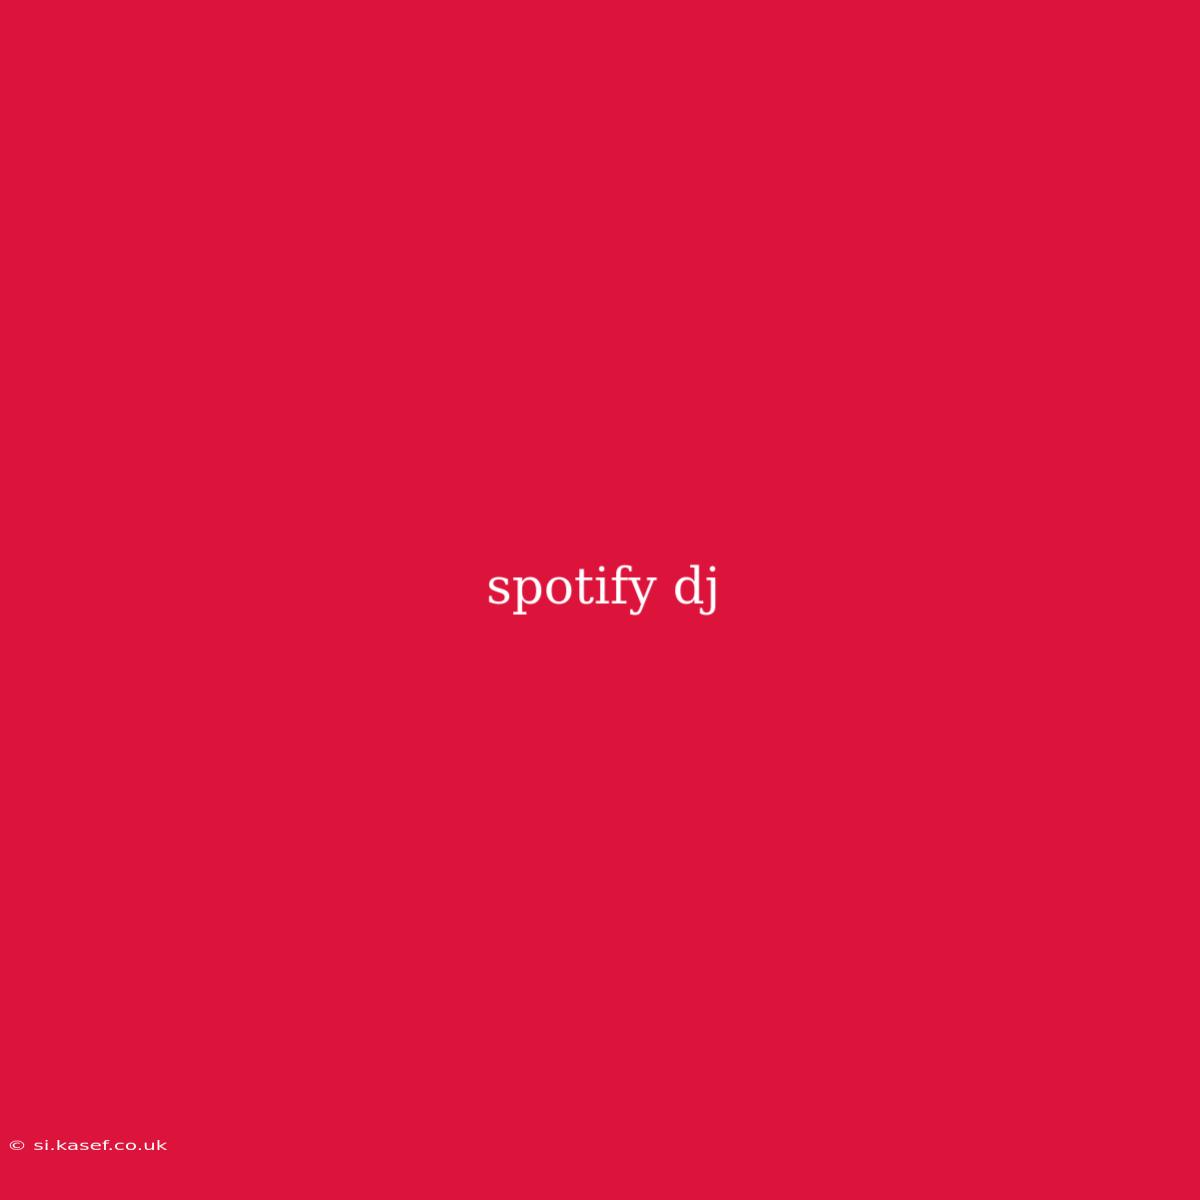 Spotify Dj